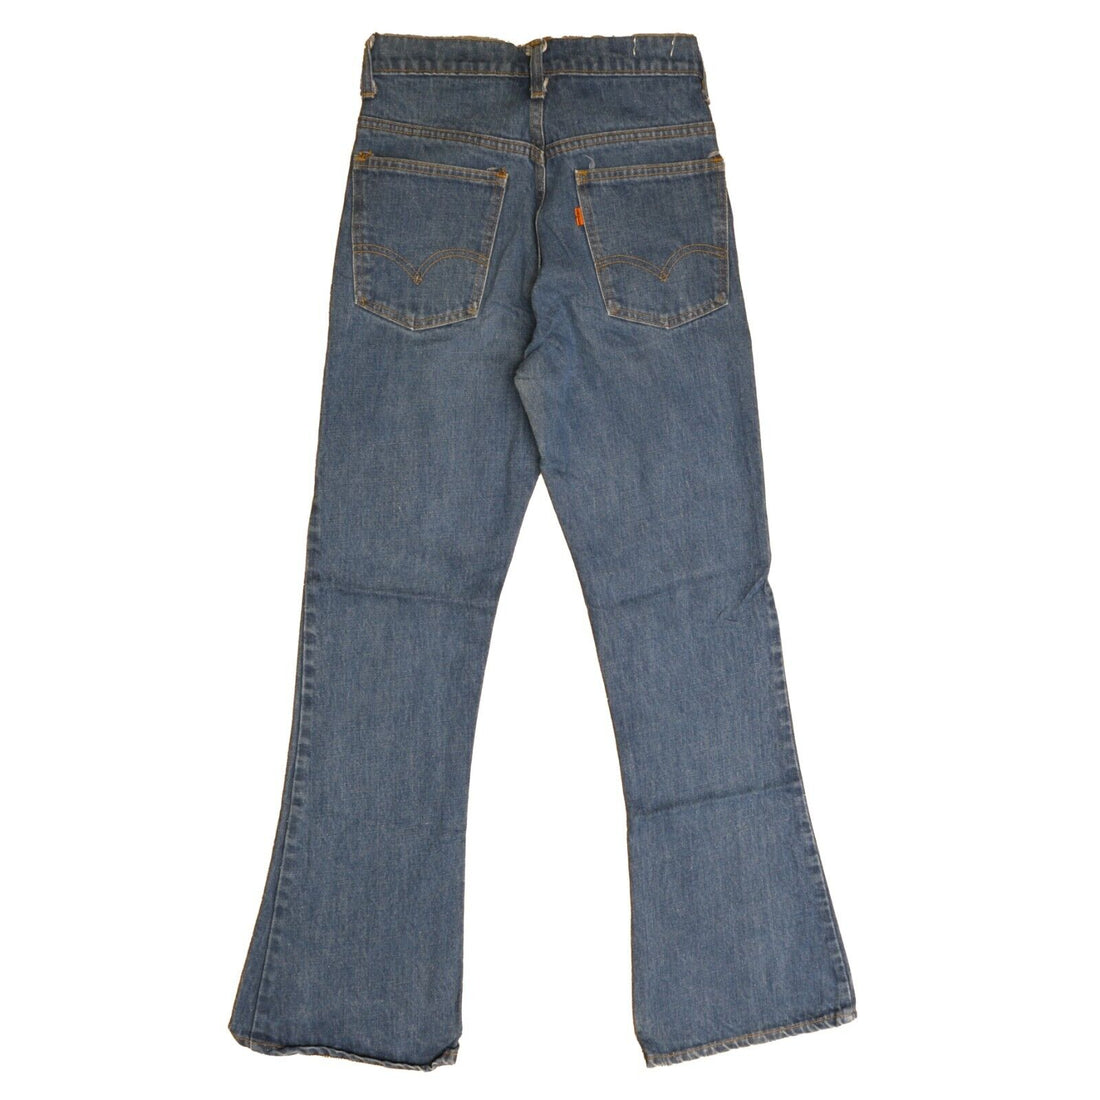 Vintage Levi Strauss Bell Bottom Denim Jeans Pants 29 X 32 Orange Tab 646 0217